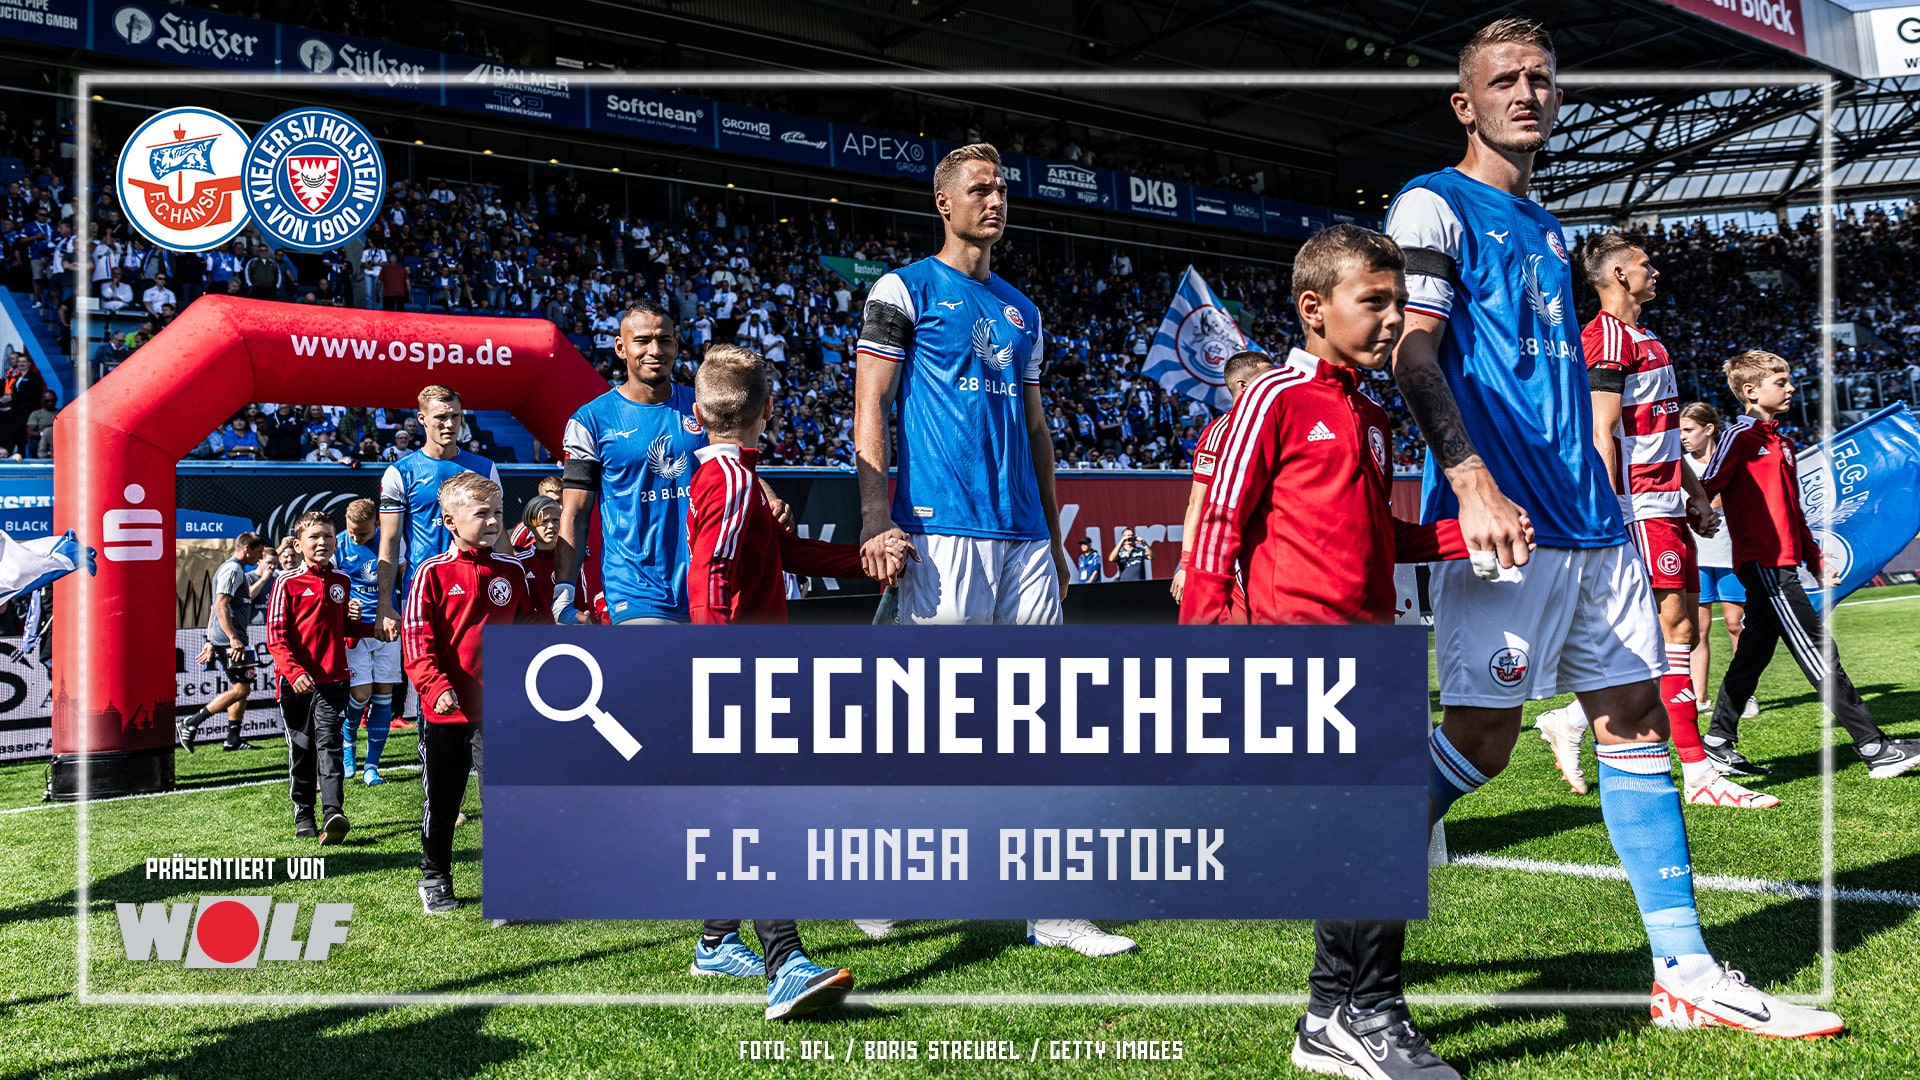 Gegnercheck Hansa Rostock punktet lieber zuhause